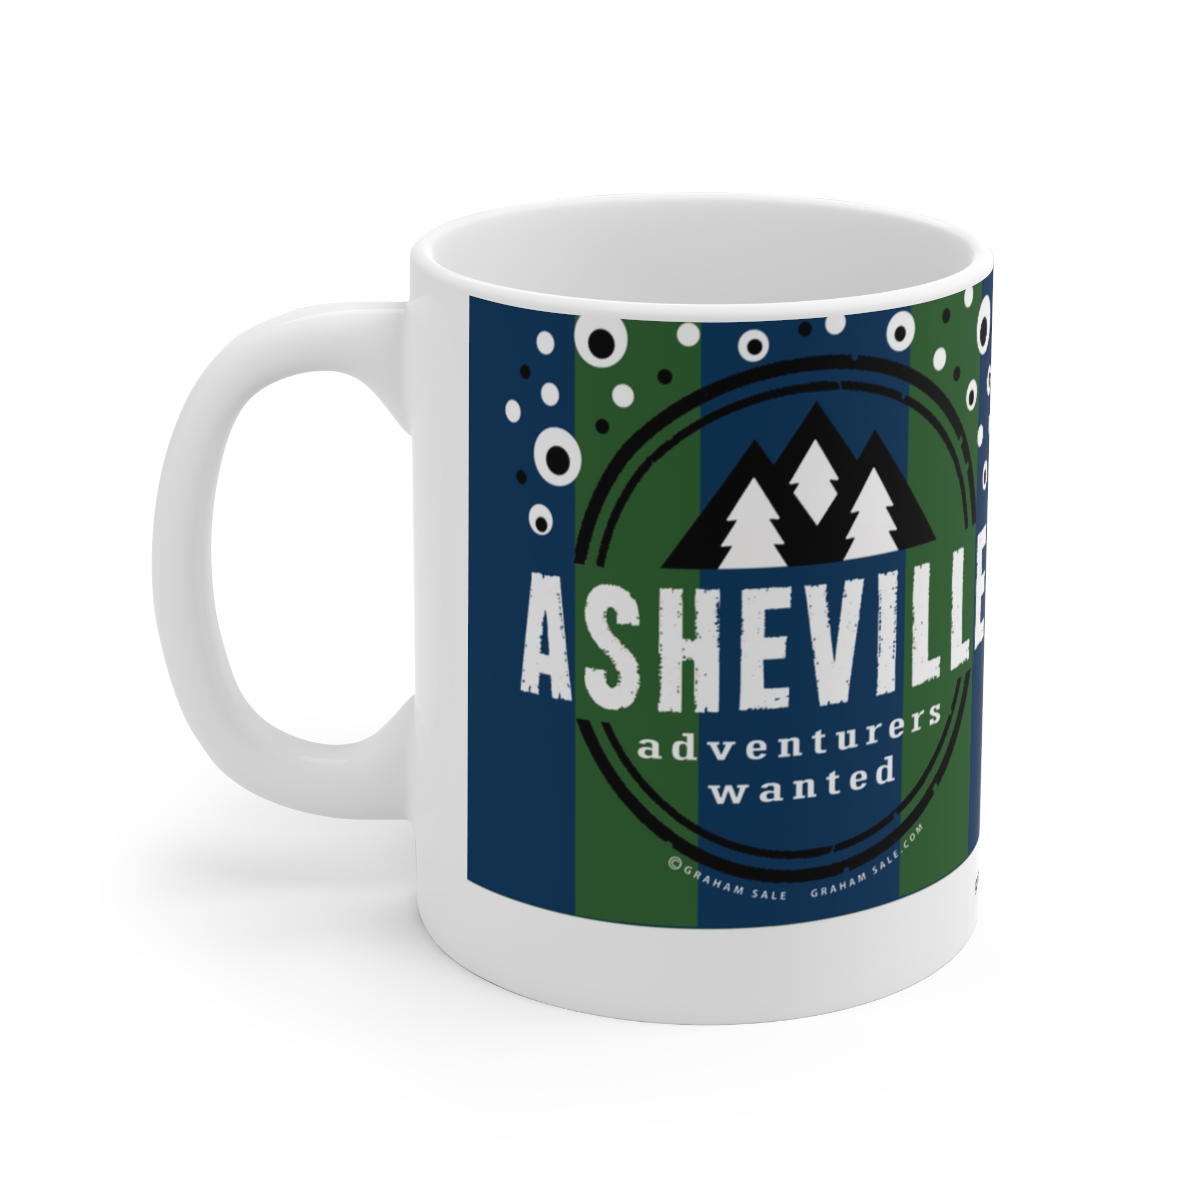 asheville adventurers wanted wholesale mugs